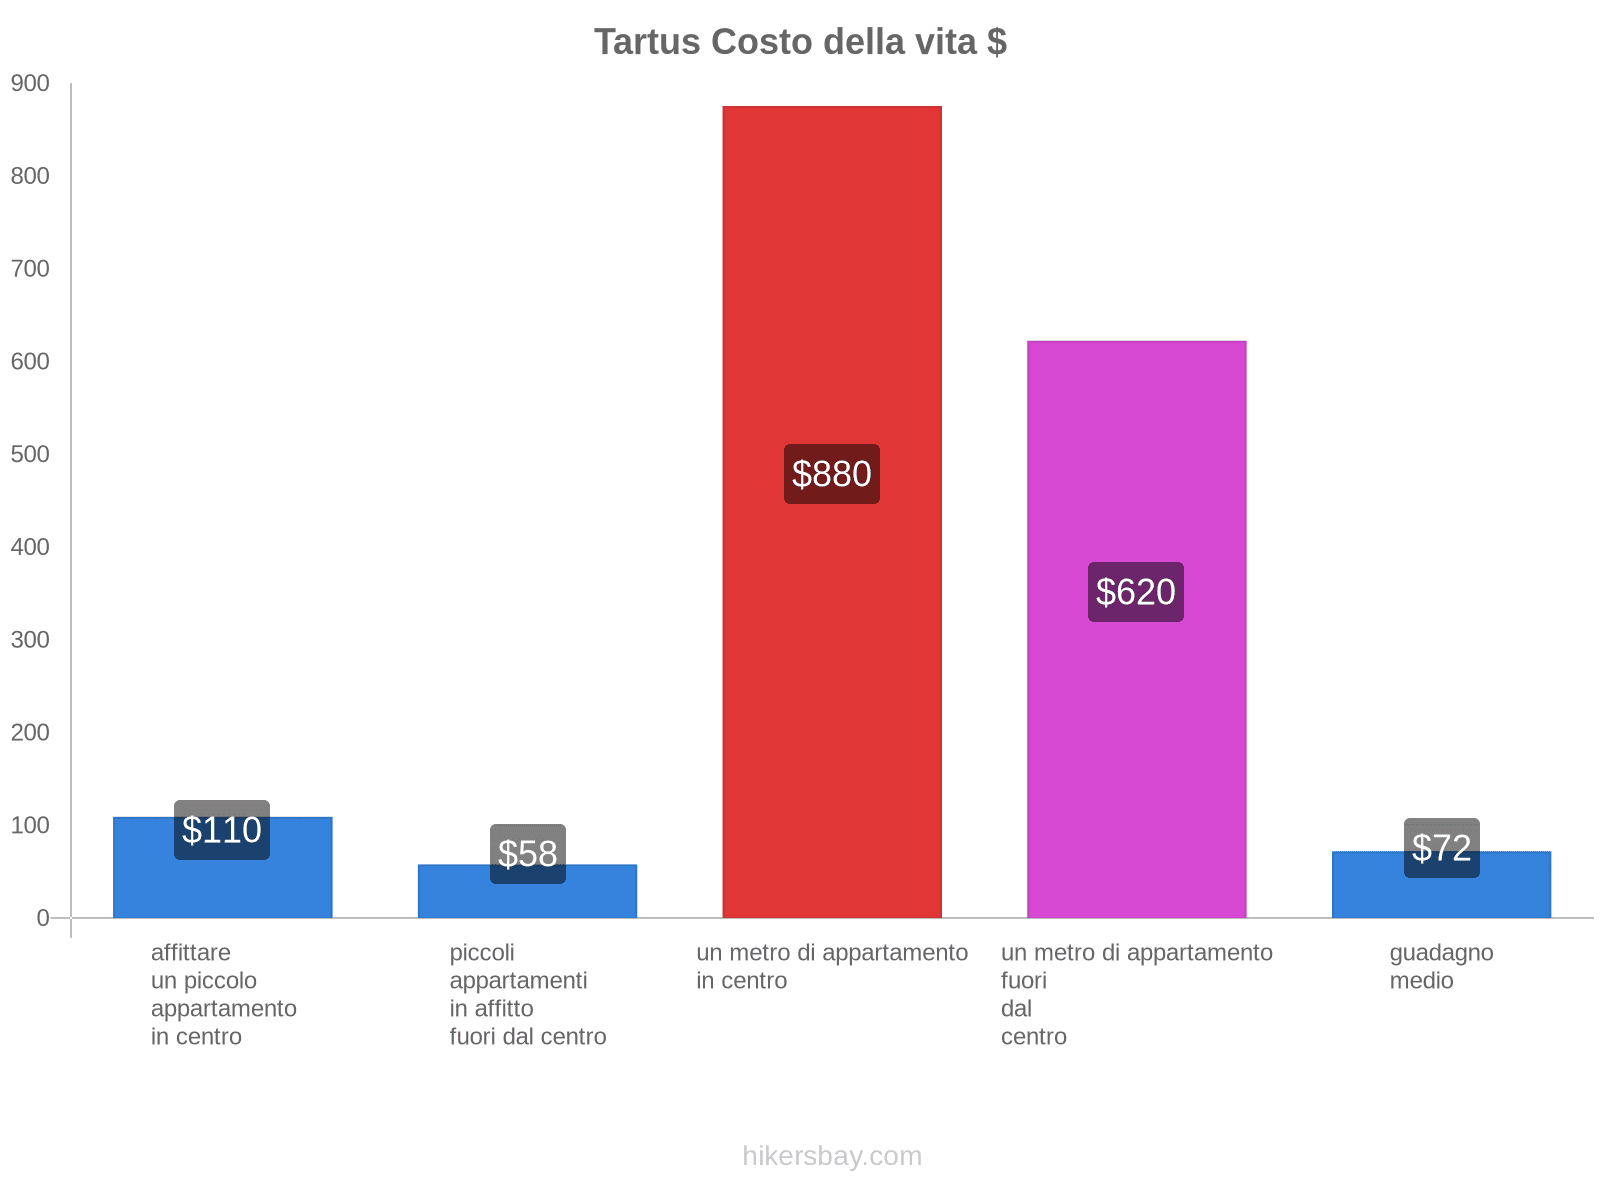 Tartus costo della vita hikersbay.com